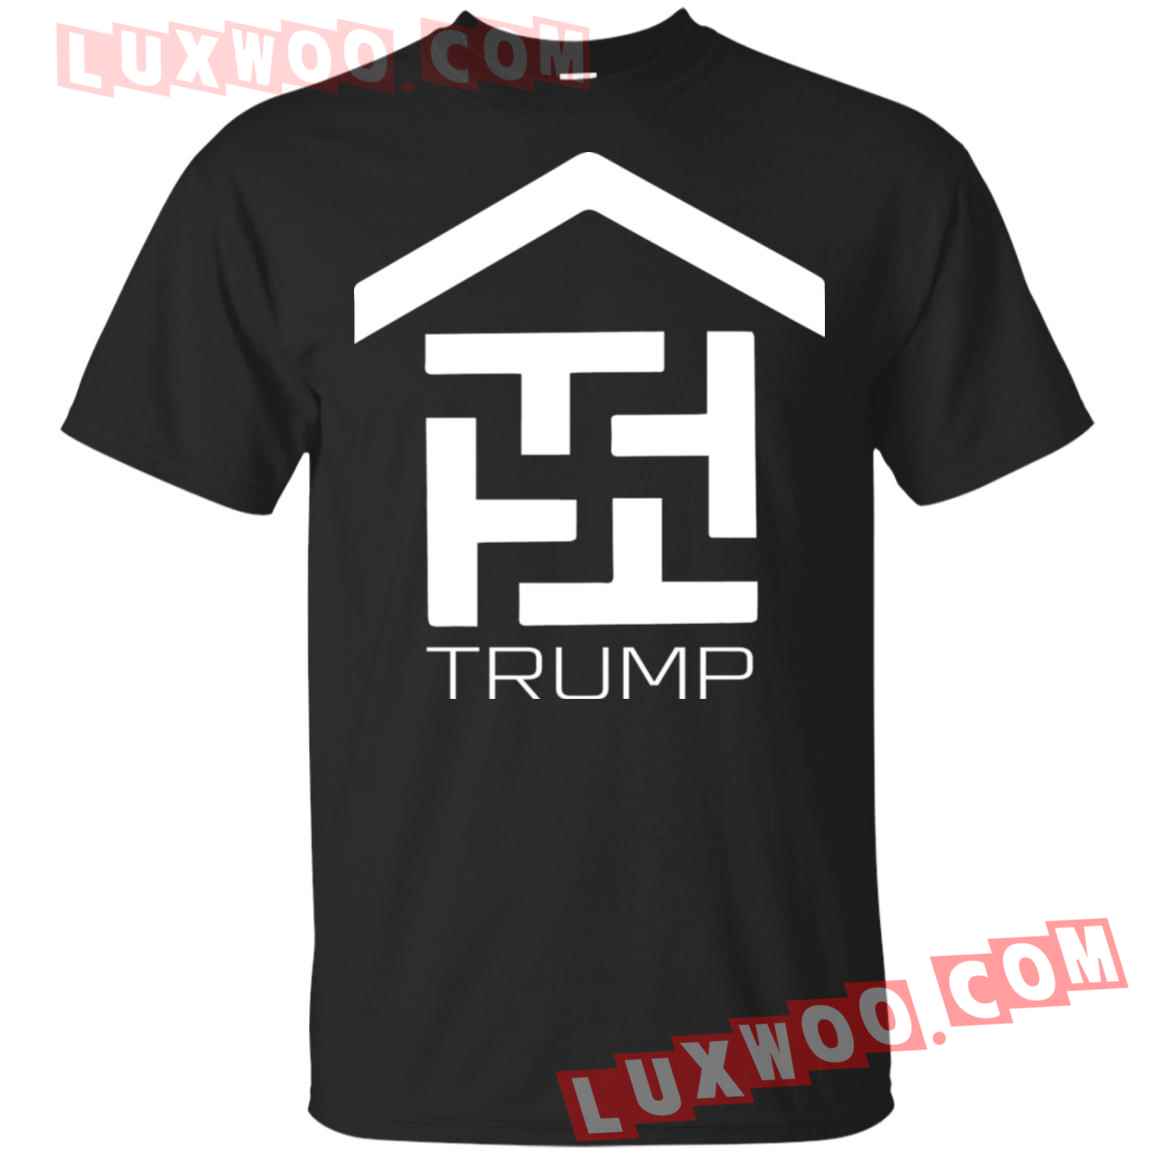 Ivanka Trump Hotel Tower Logo Shirt